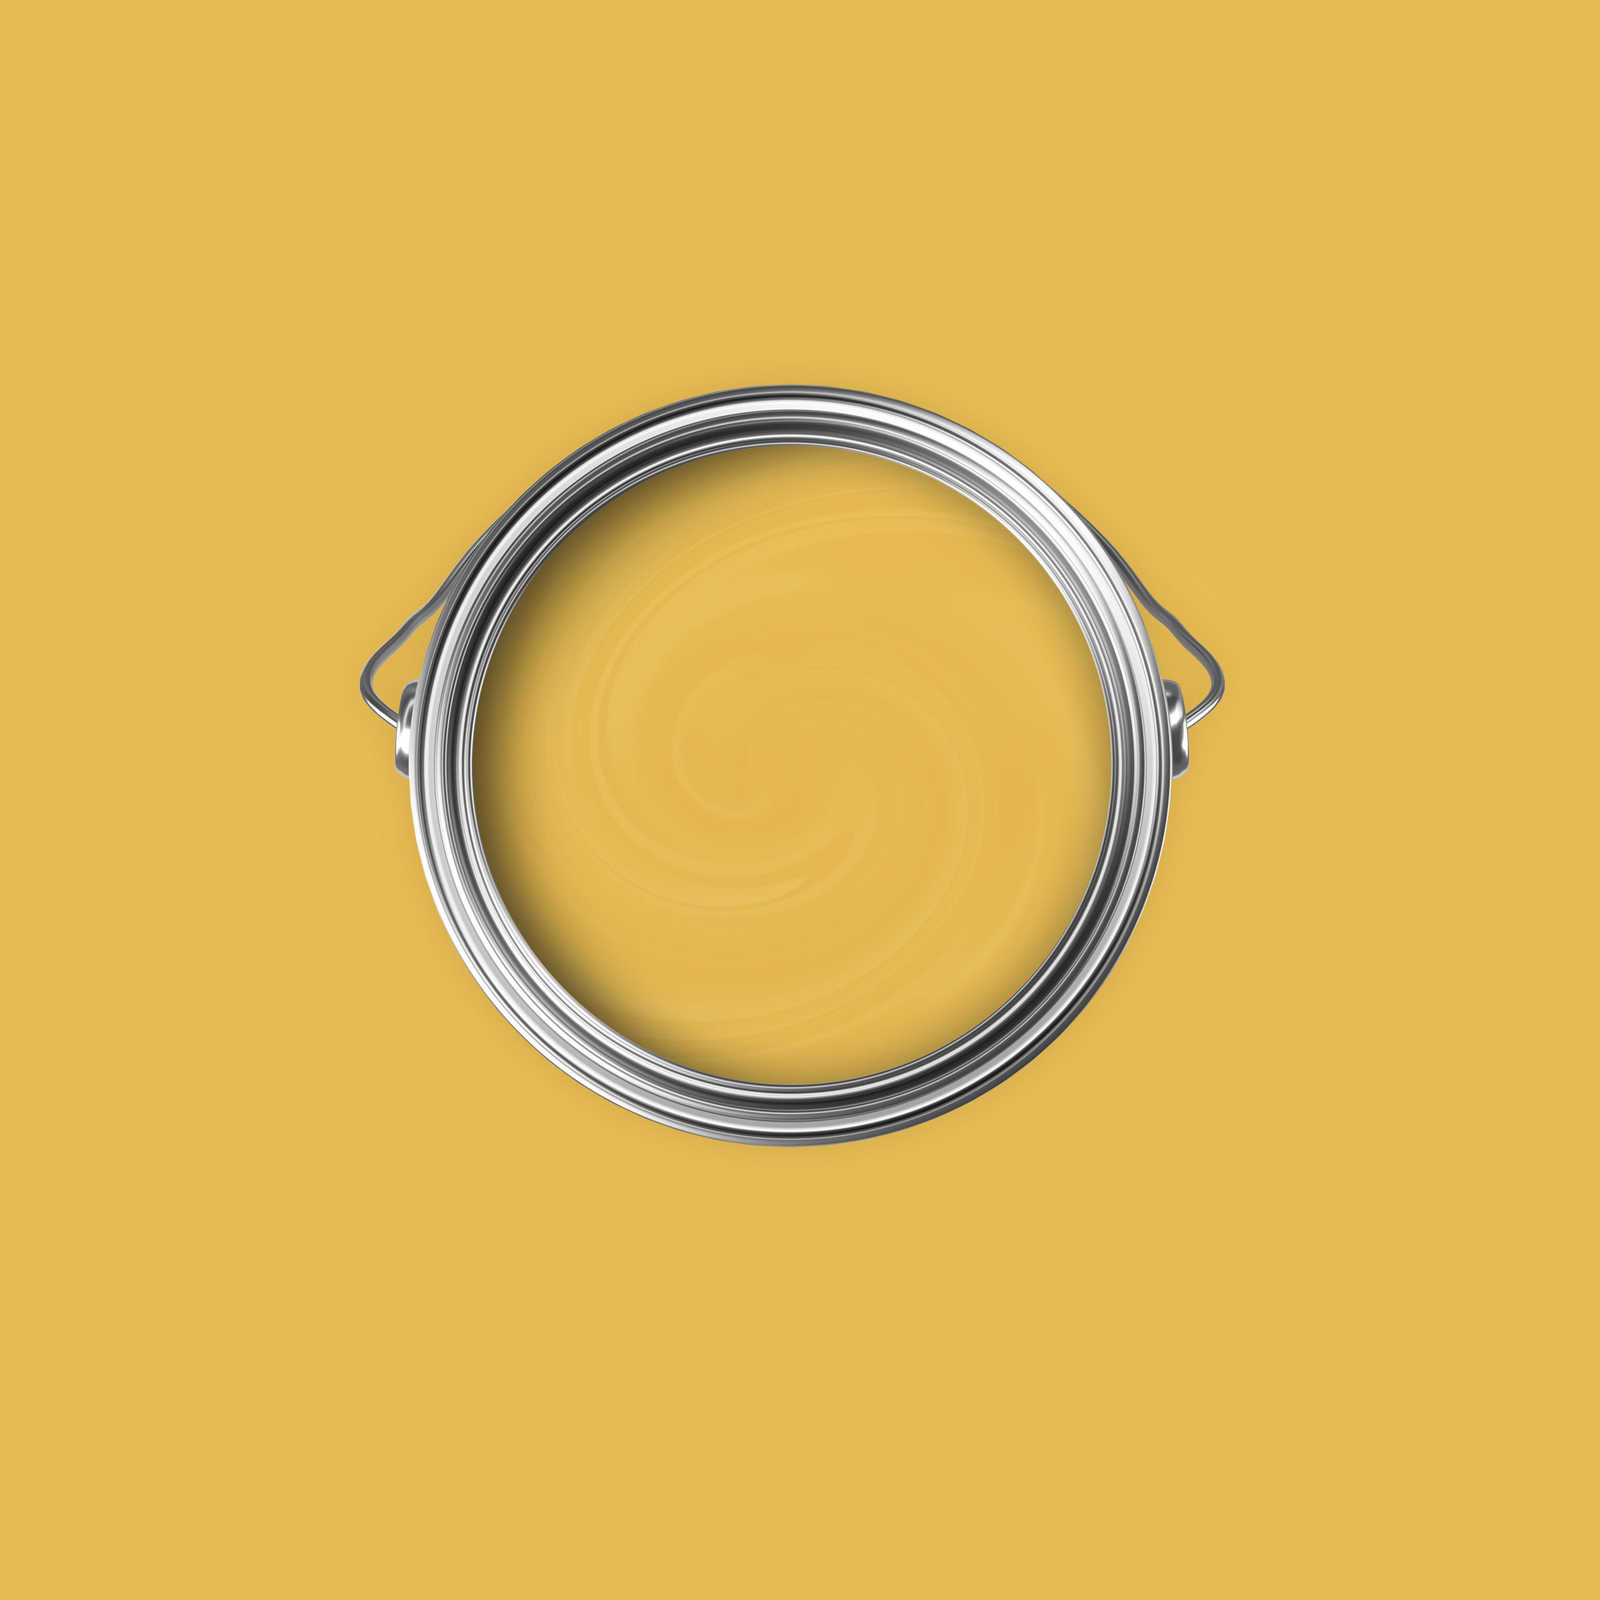             Premium Wandfarbe strahlendes Senfgelb »Juicy Yellow« NW802 – 2,5 Liter
        